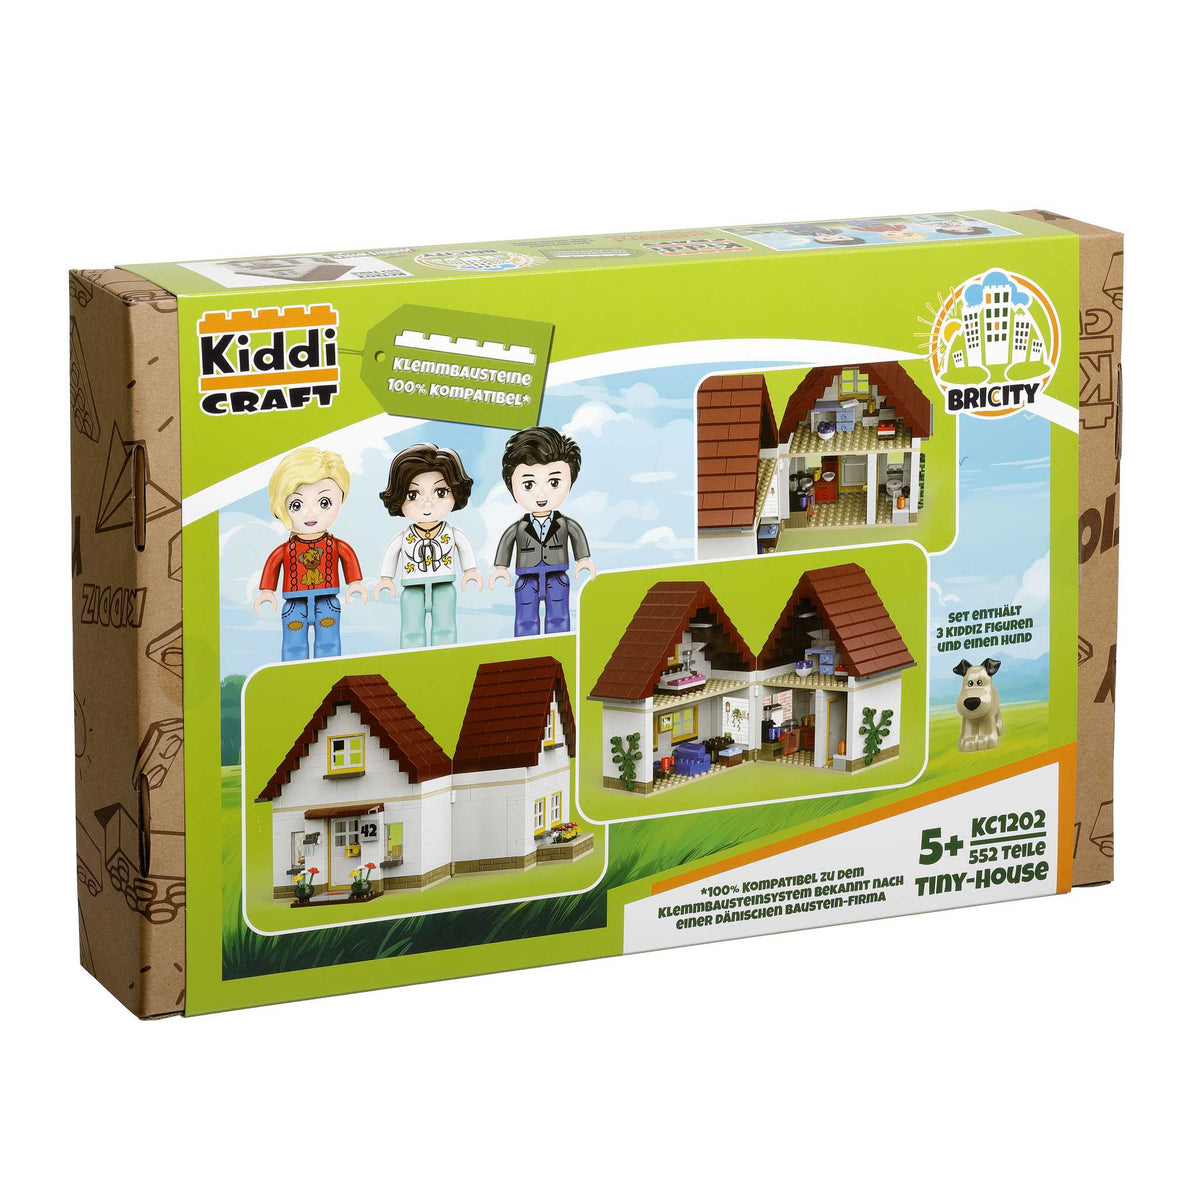 1202 - Tiny House (Kiddicraft)